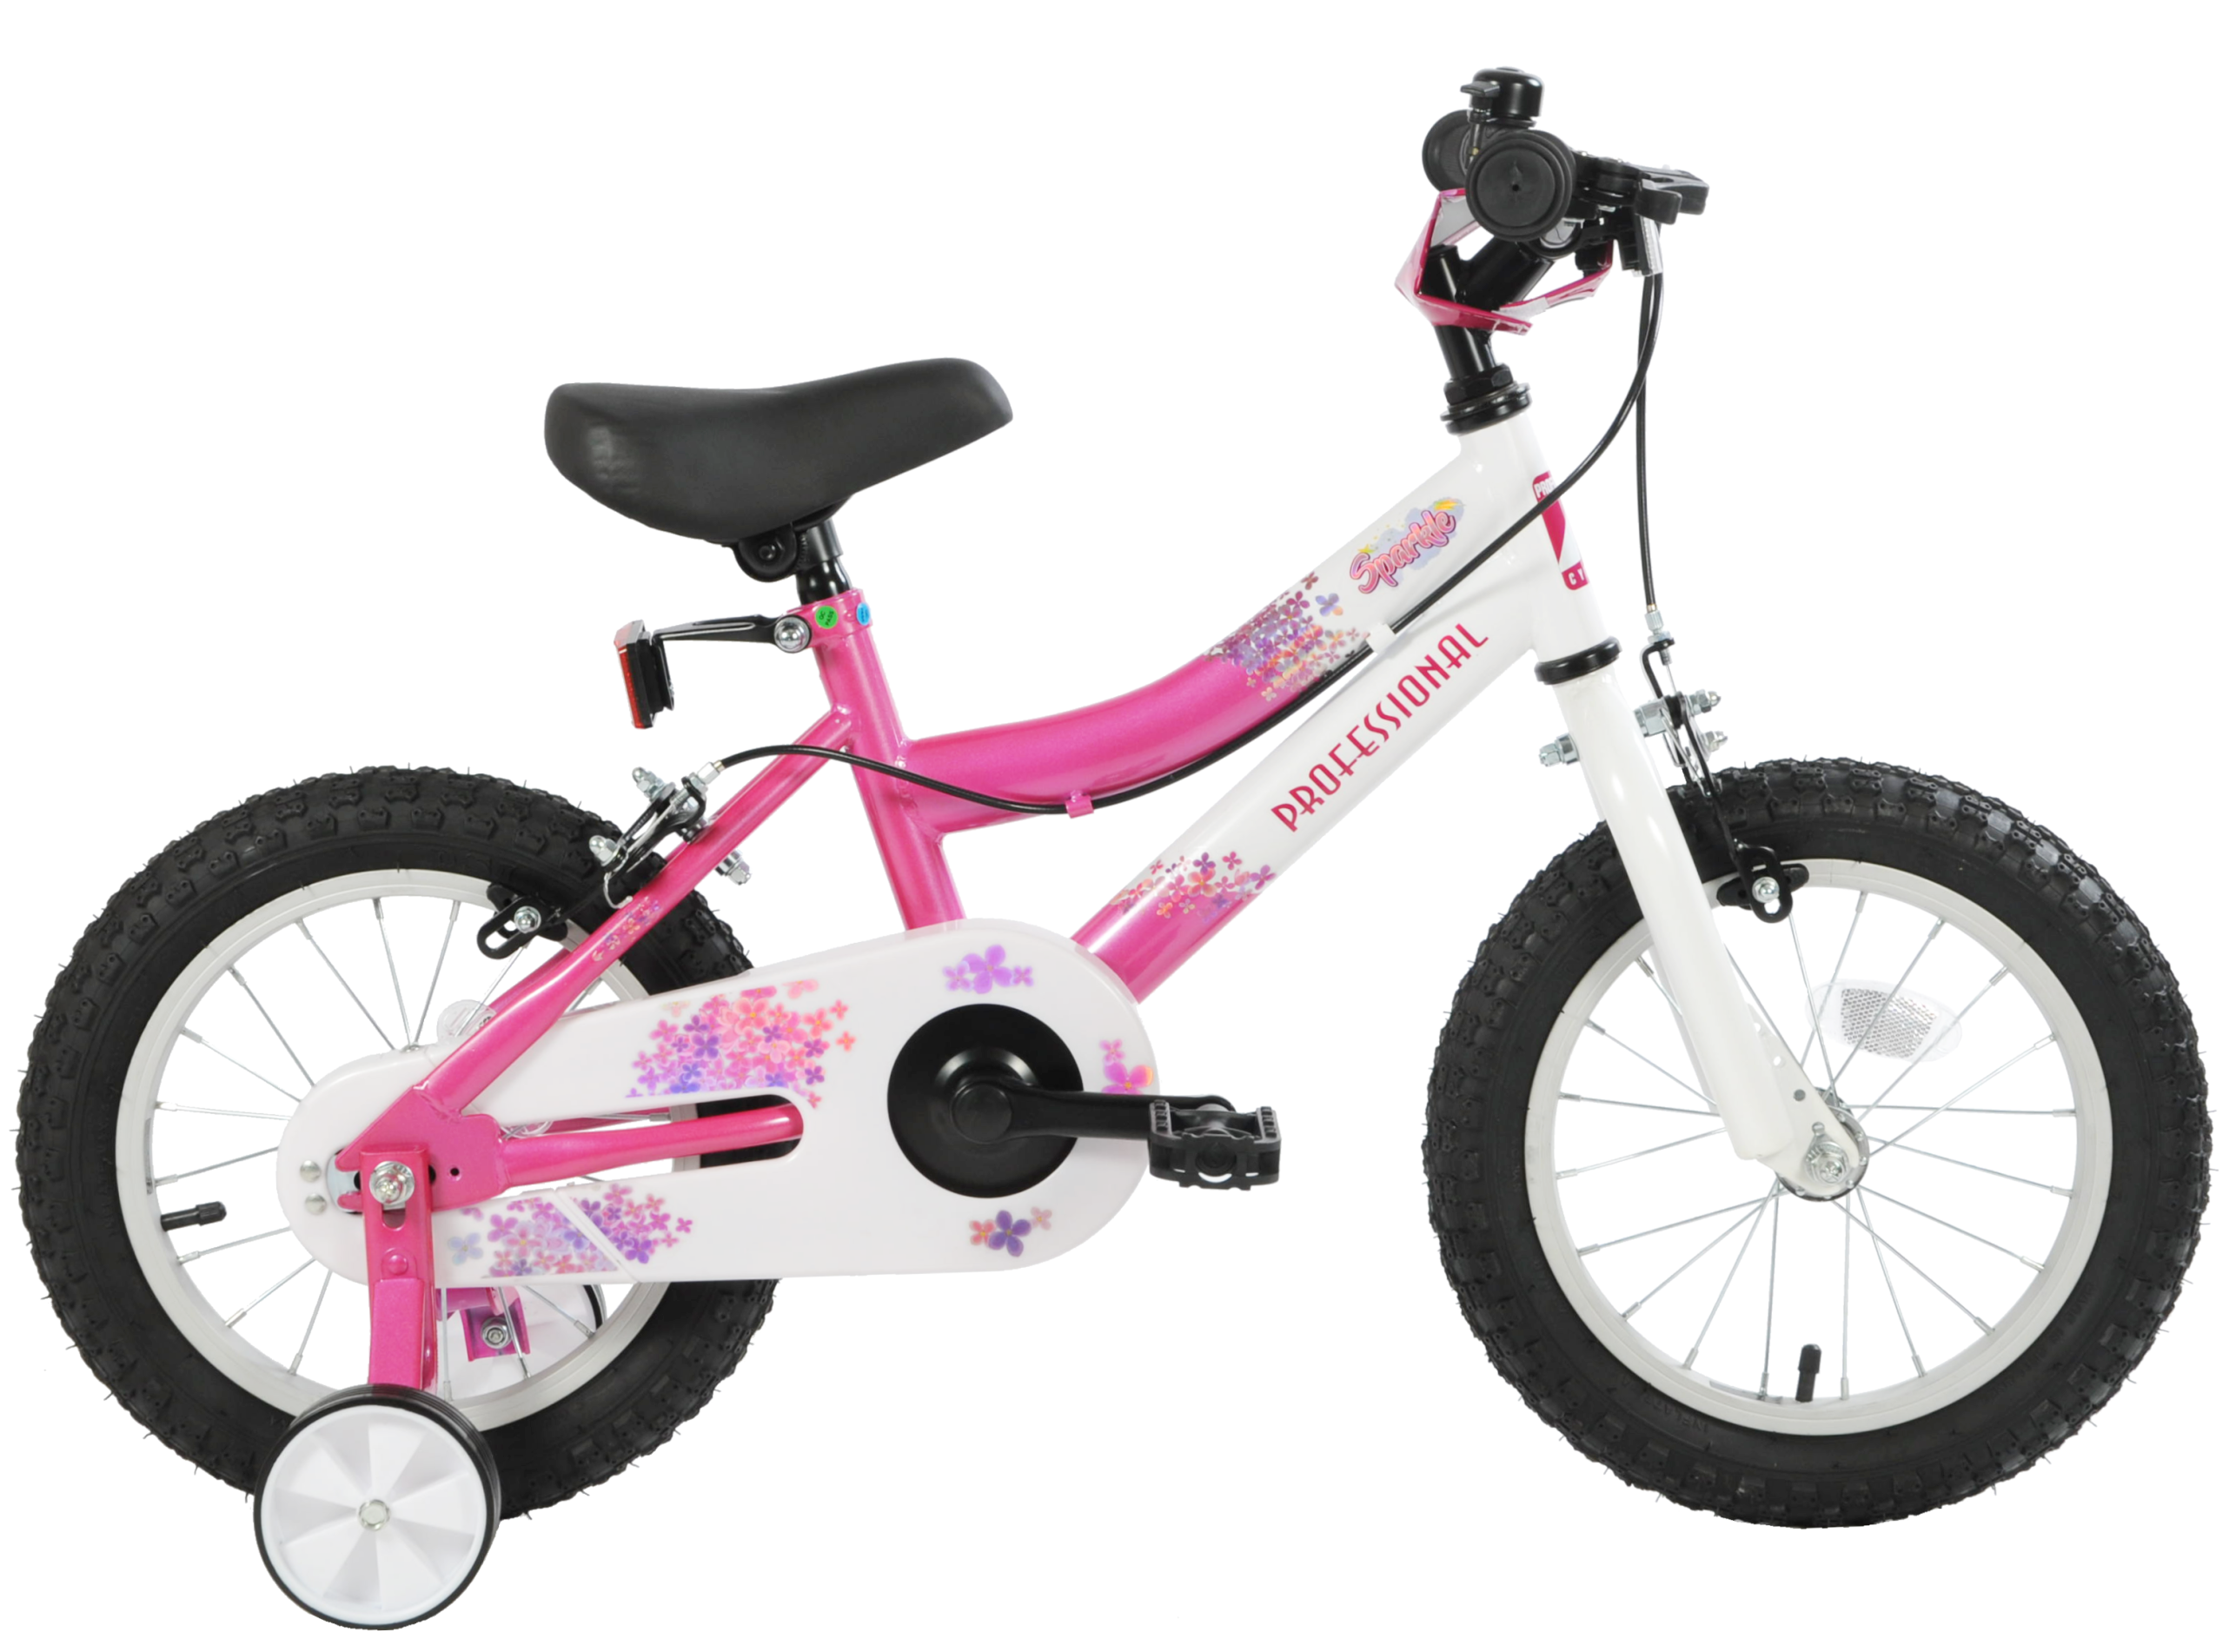 Professional Sparkle 12" Wheel Kids Bike - Pink and White - Sportandleisure.com